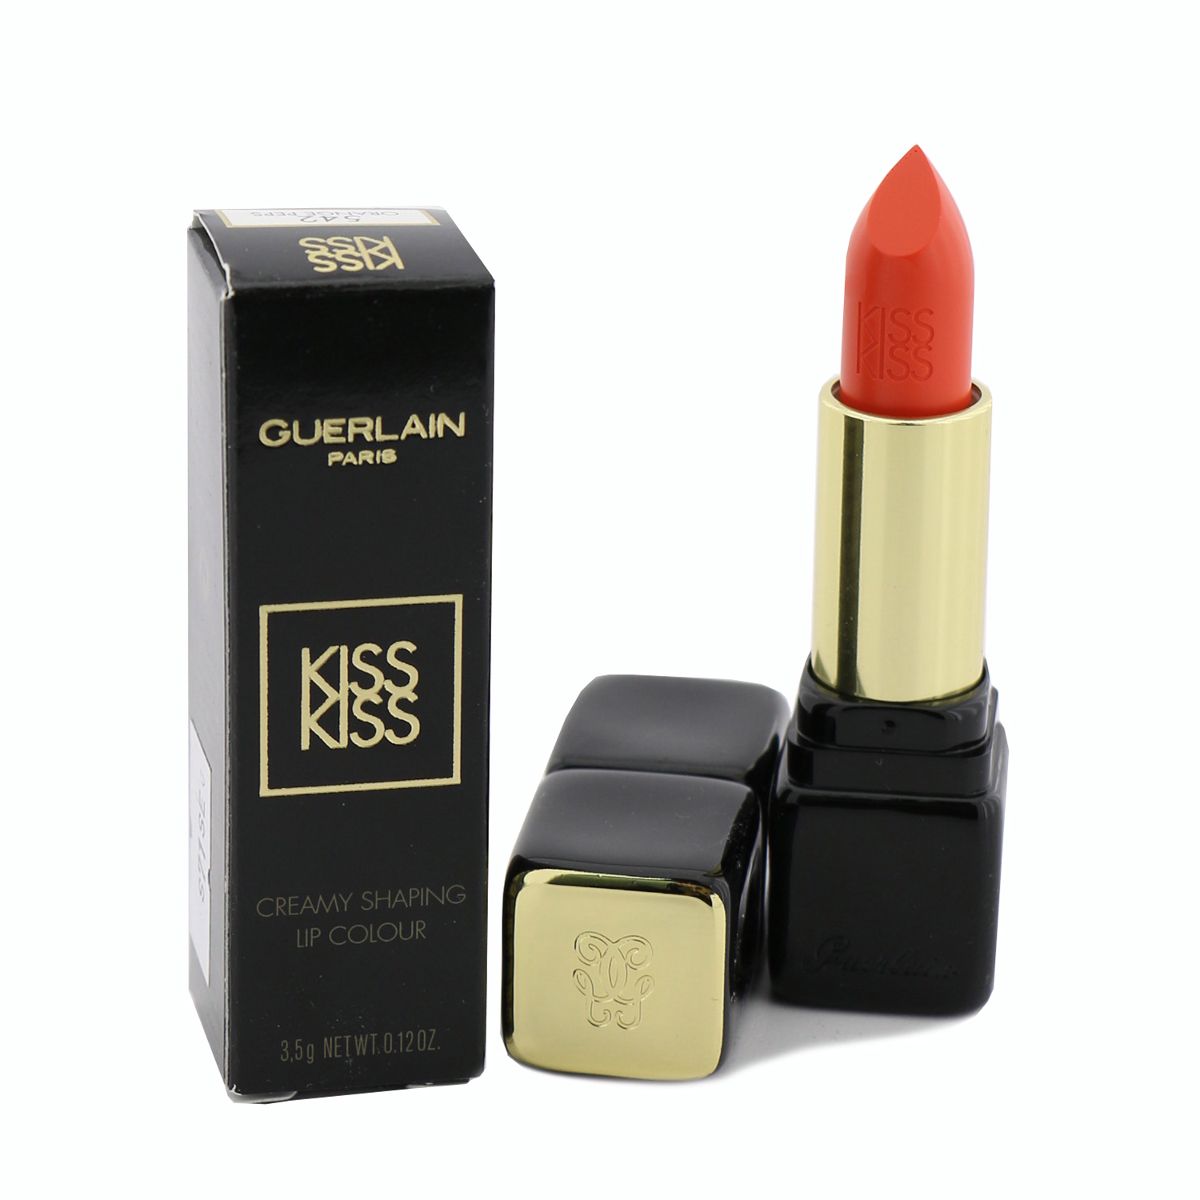 KissKiss Creamy Shaping Lip Colour - #542 Orange Peps Guerlain Image